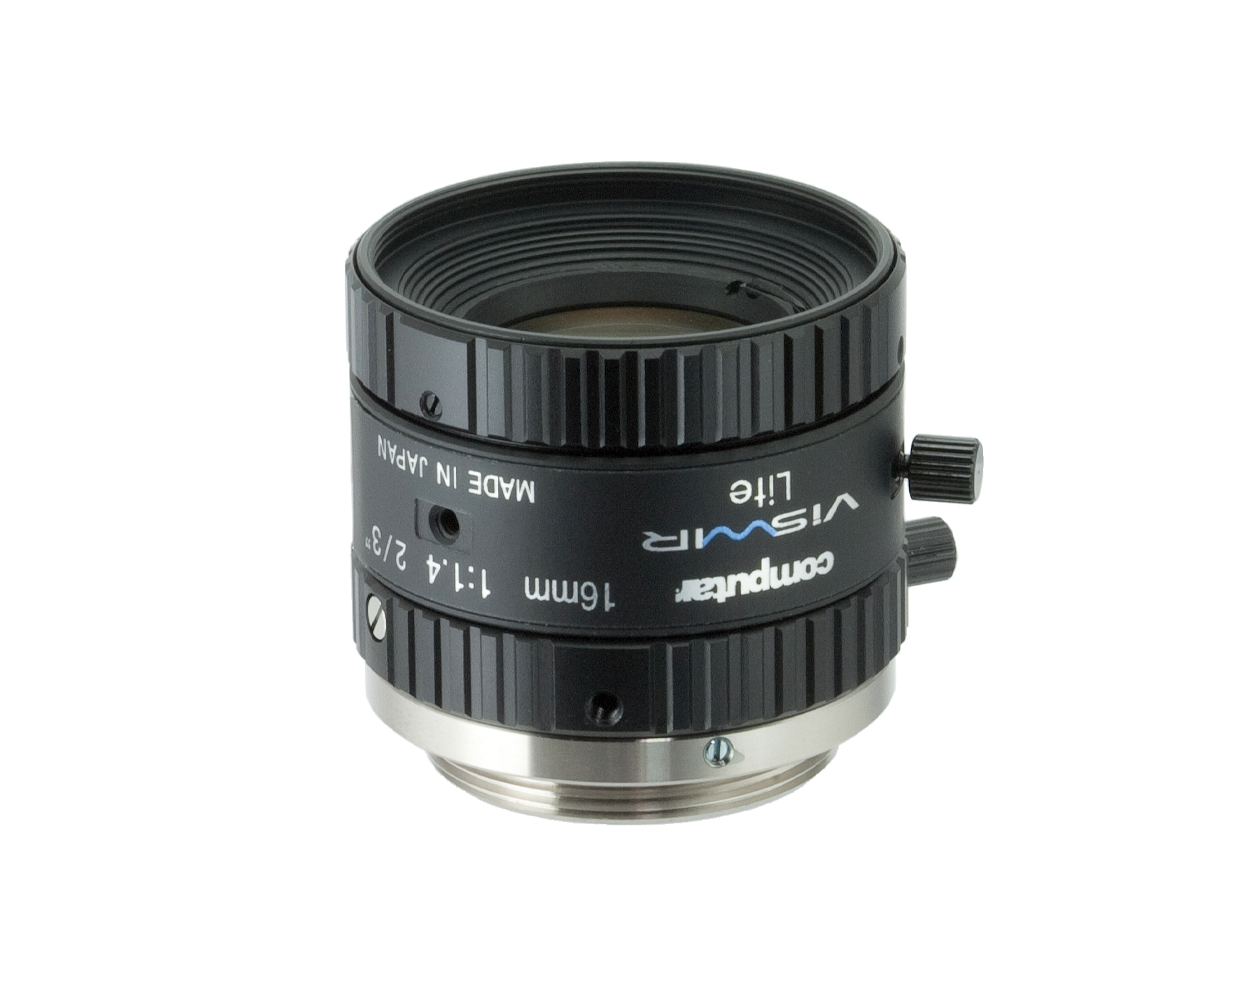 Ống kính - Lens camera Computar M1614-VSW